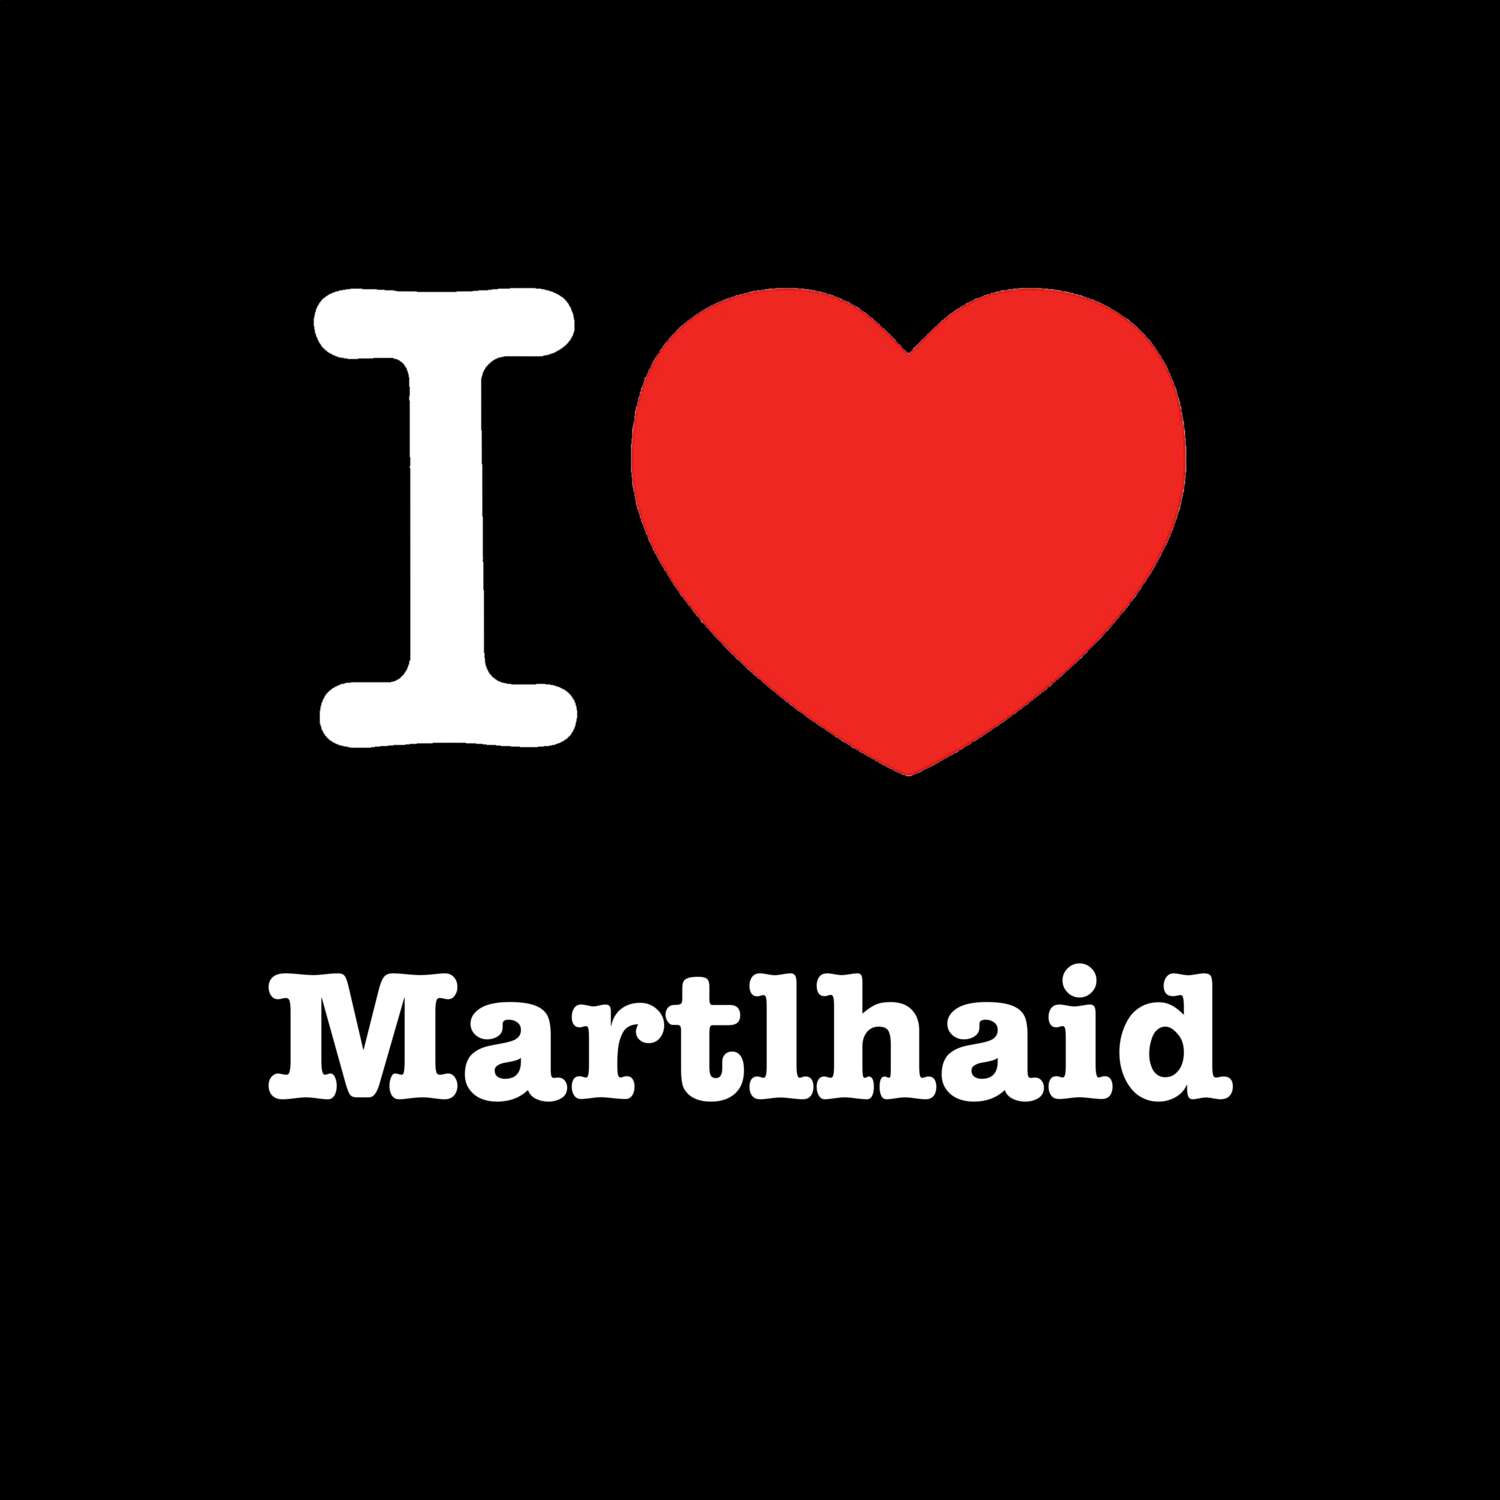 Martlhaid T-Shirt »I love«